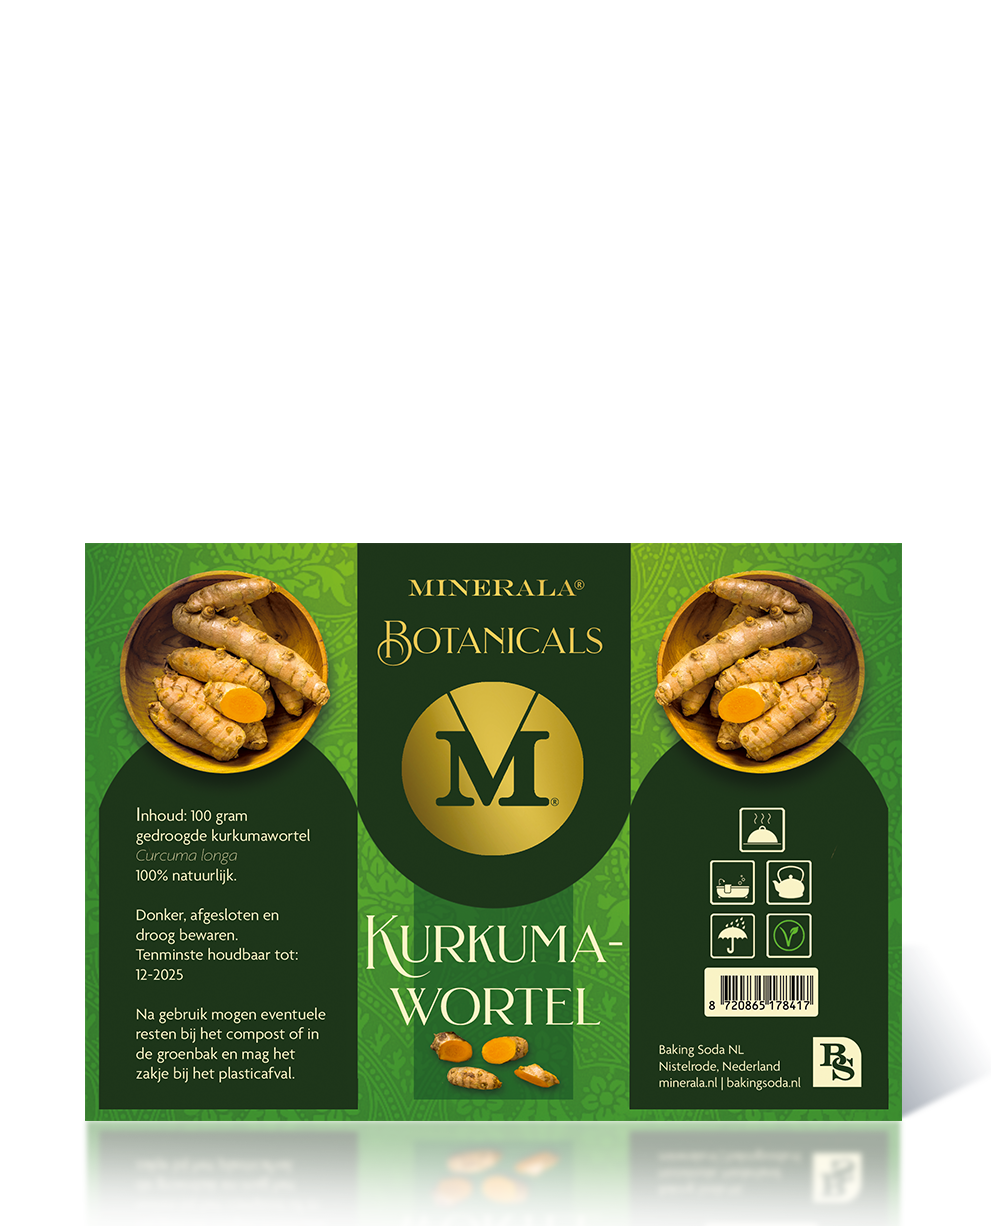 Minerala Botanicals Kurkuma wortel - Bakingsoda NL